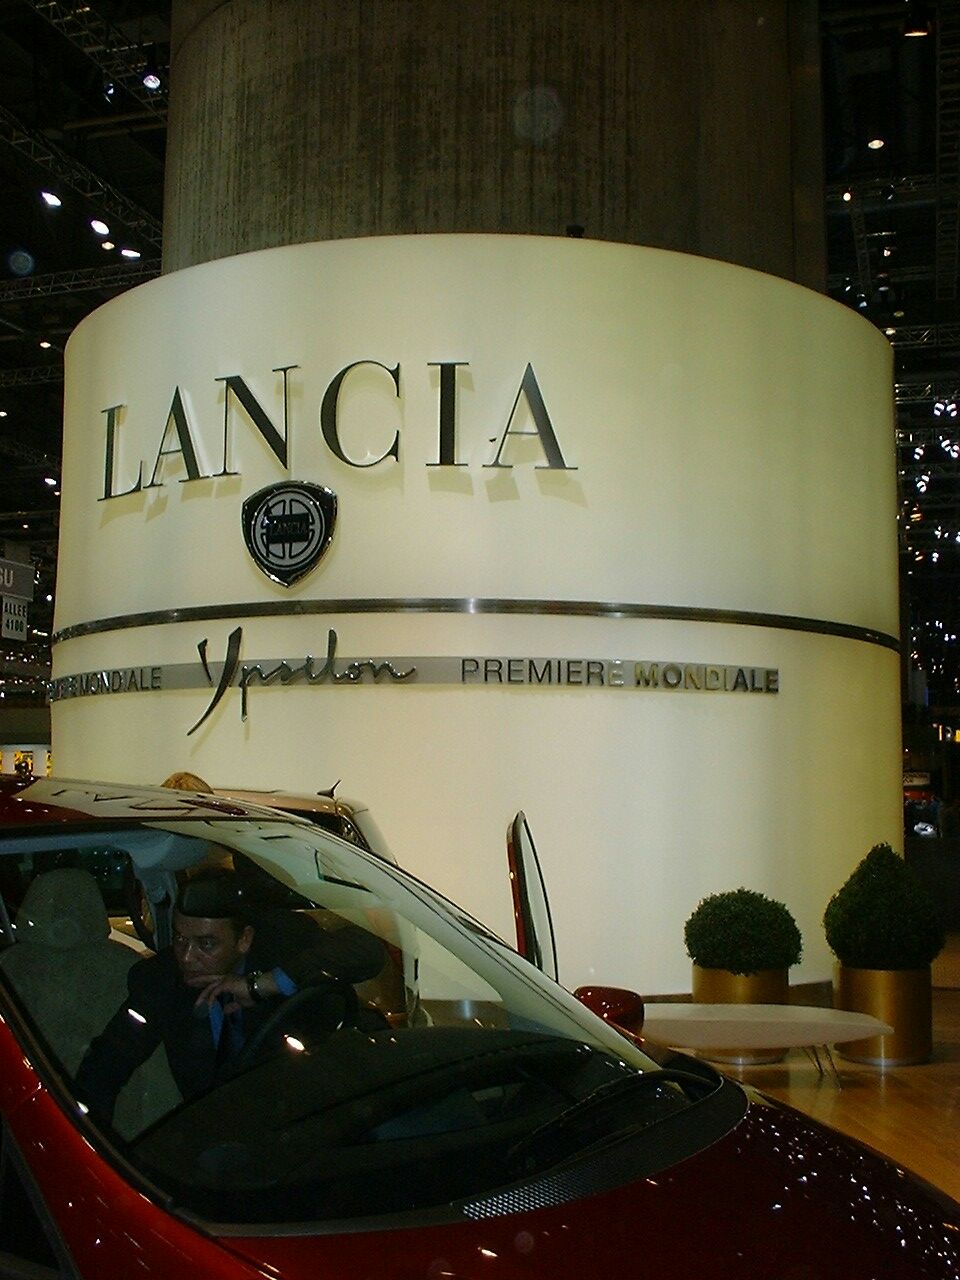 Lancia stand at the 2003 Geneva Motor Show